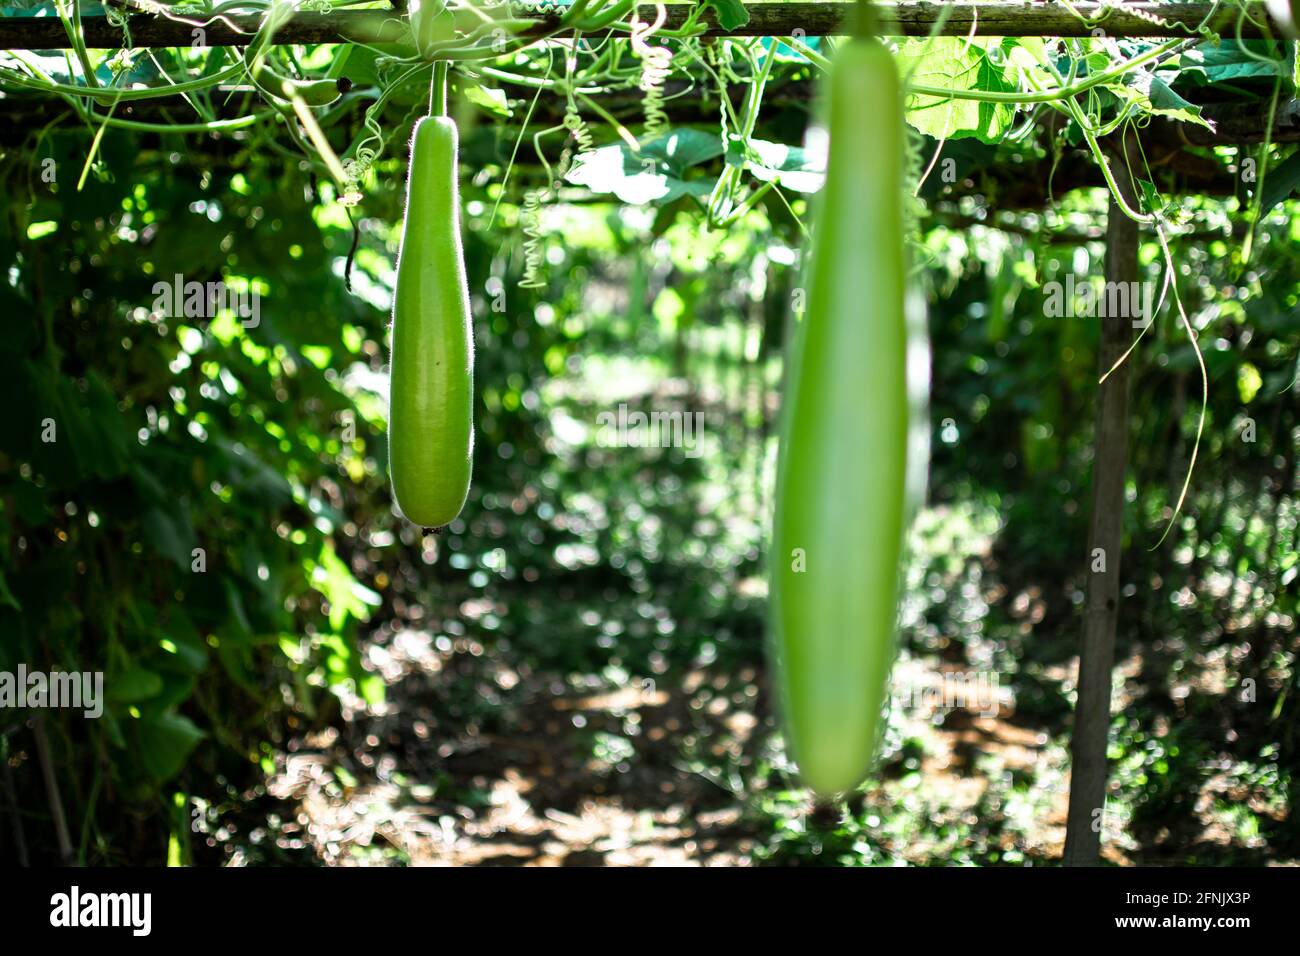 Two green organic squash vegetables growing hanging at a local rural farm near Inle Lake, Nyaung Shwe, Shan state, Myanmar Stock Photo